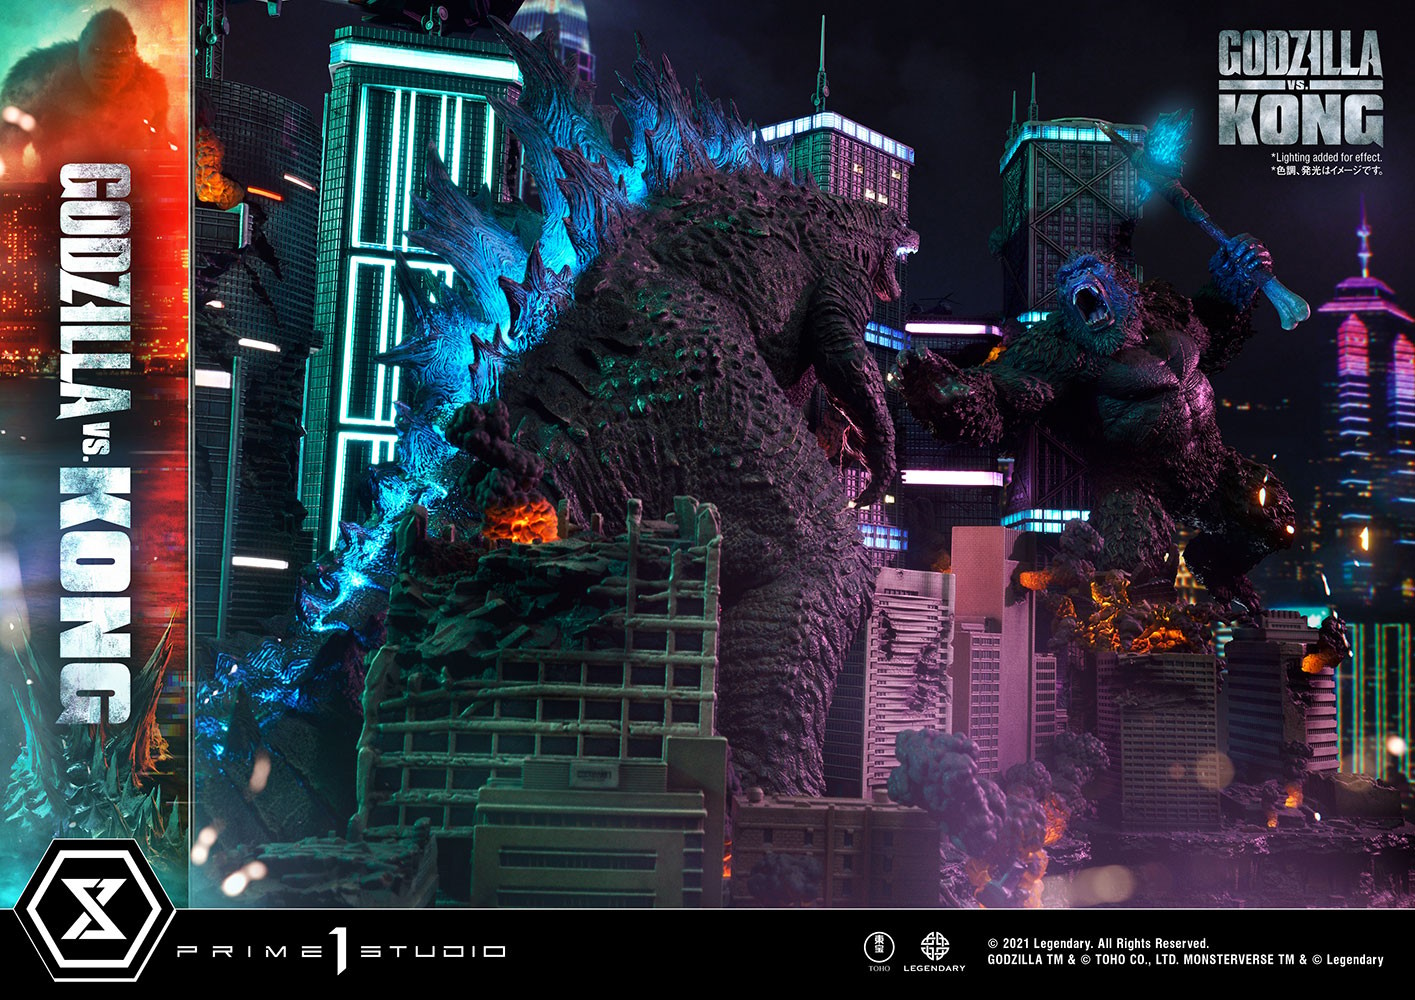 Godzilla vs Kong Final Battle (Prototype Shown) View 28